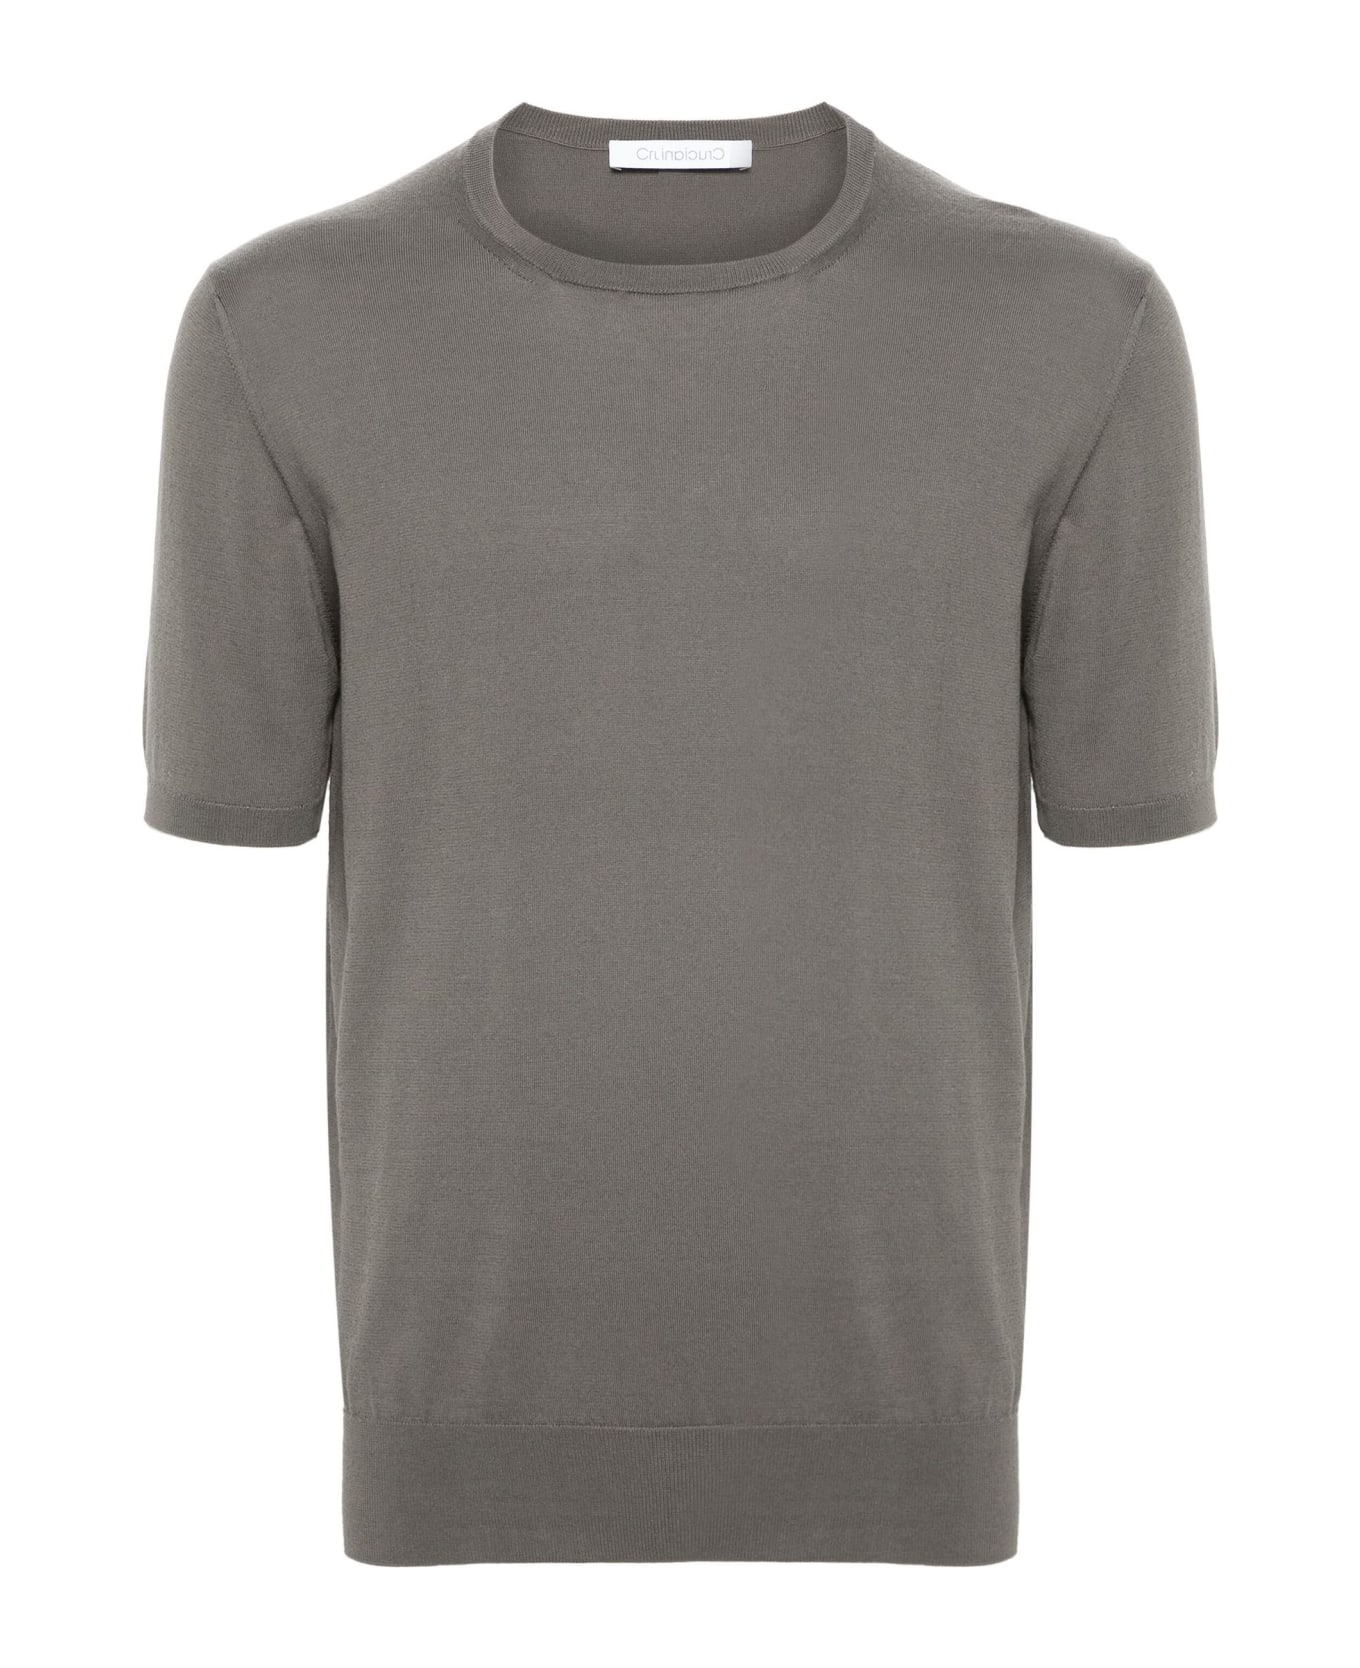 Cruciani Grey Cotton T-shirt - Grey